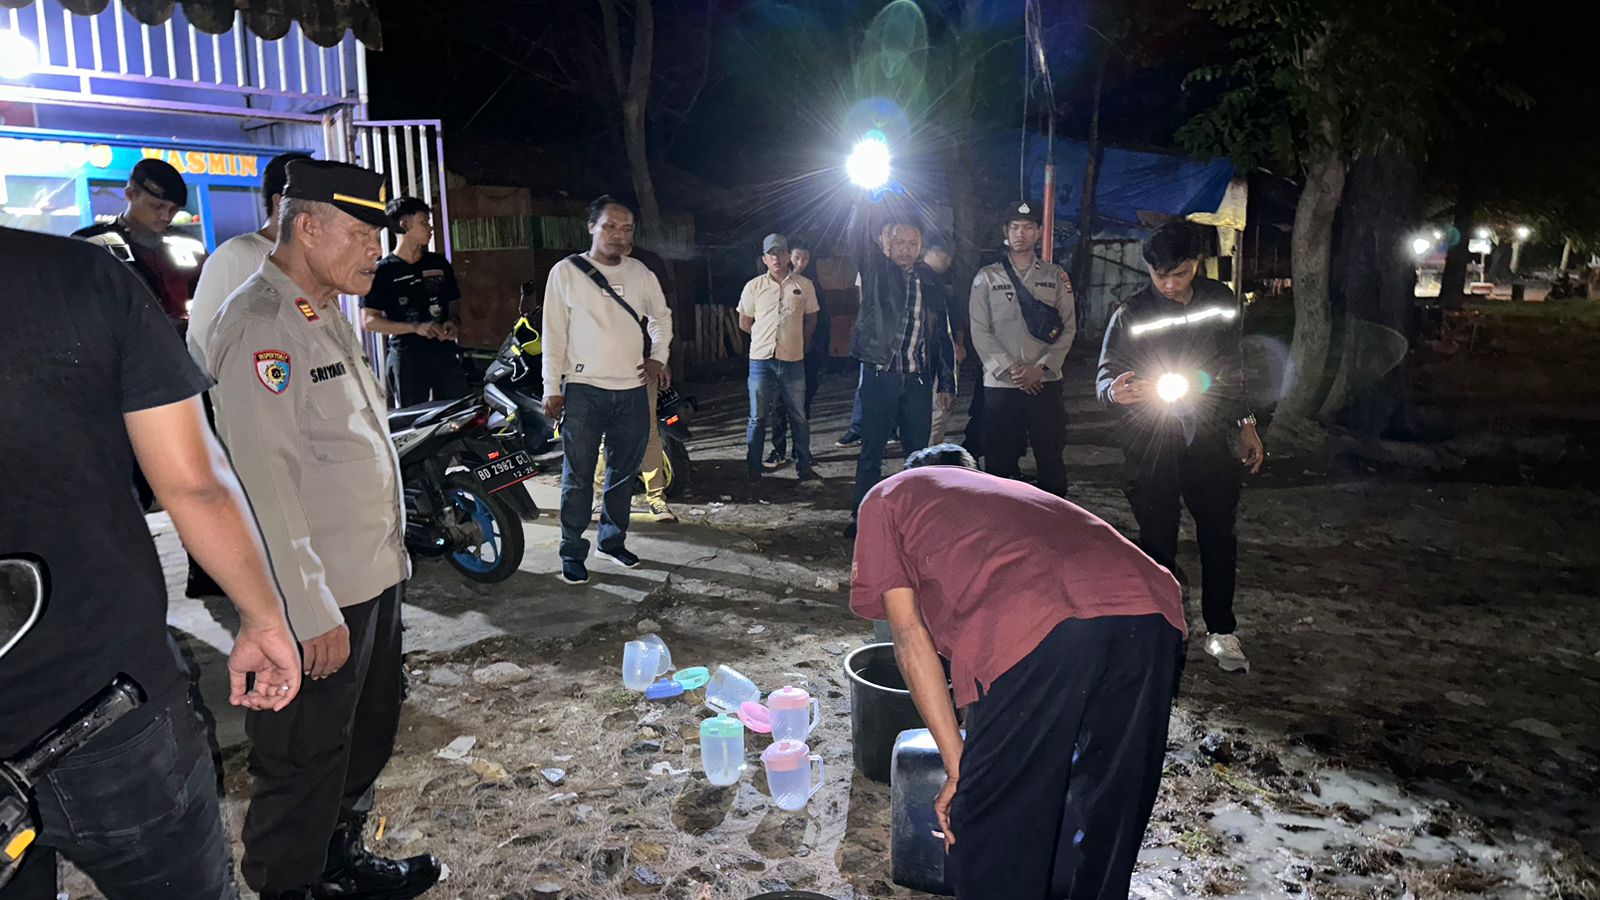 Warem Berkedok Kedai Bakso Dirazia, Polisi Musnahkan Ratusan Liter Tuak